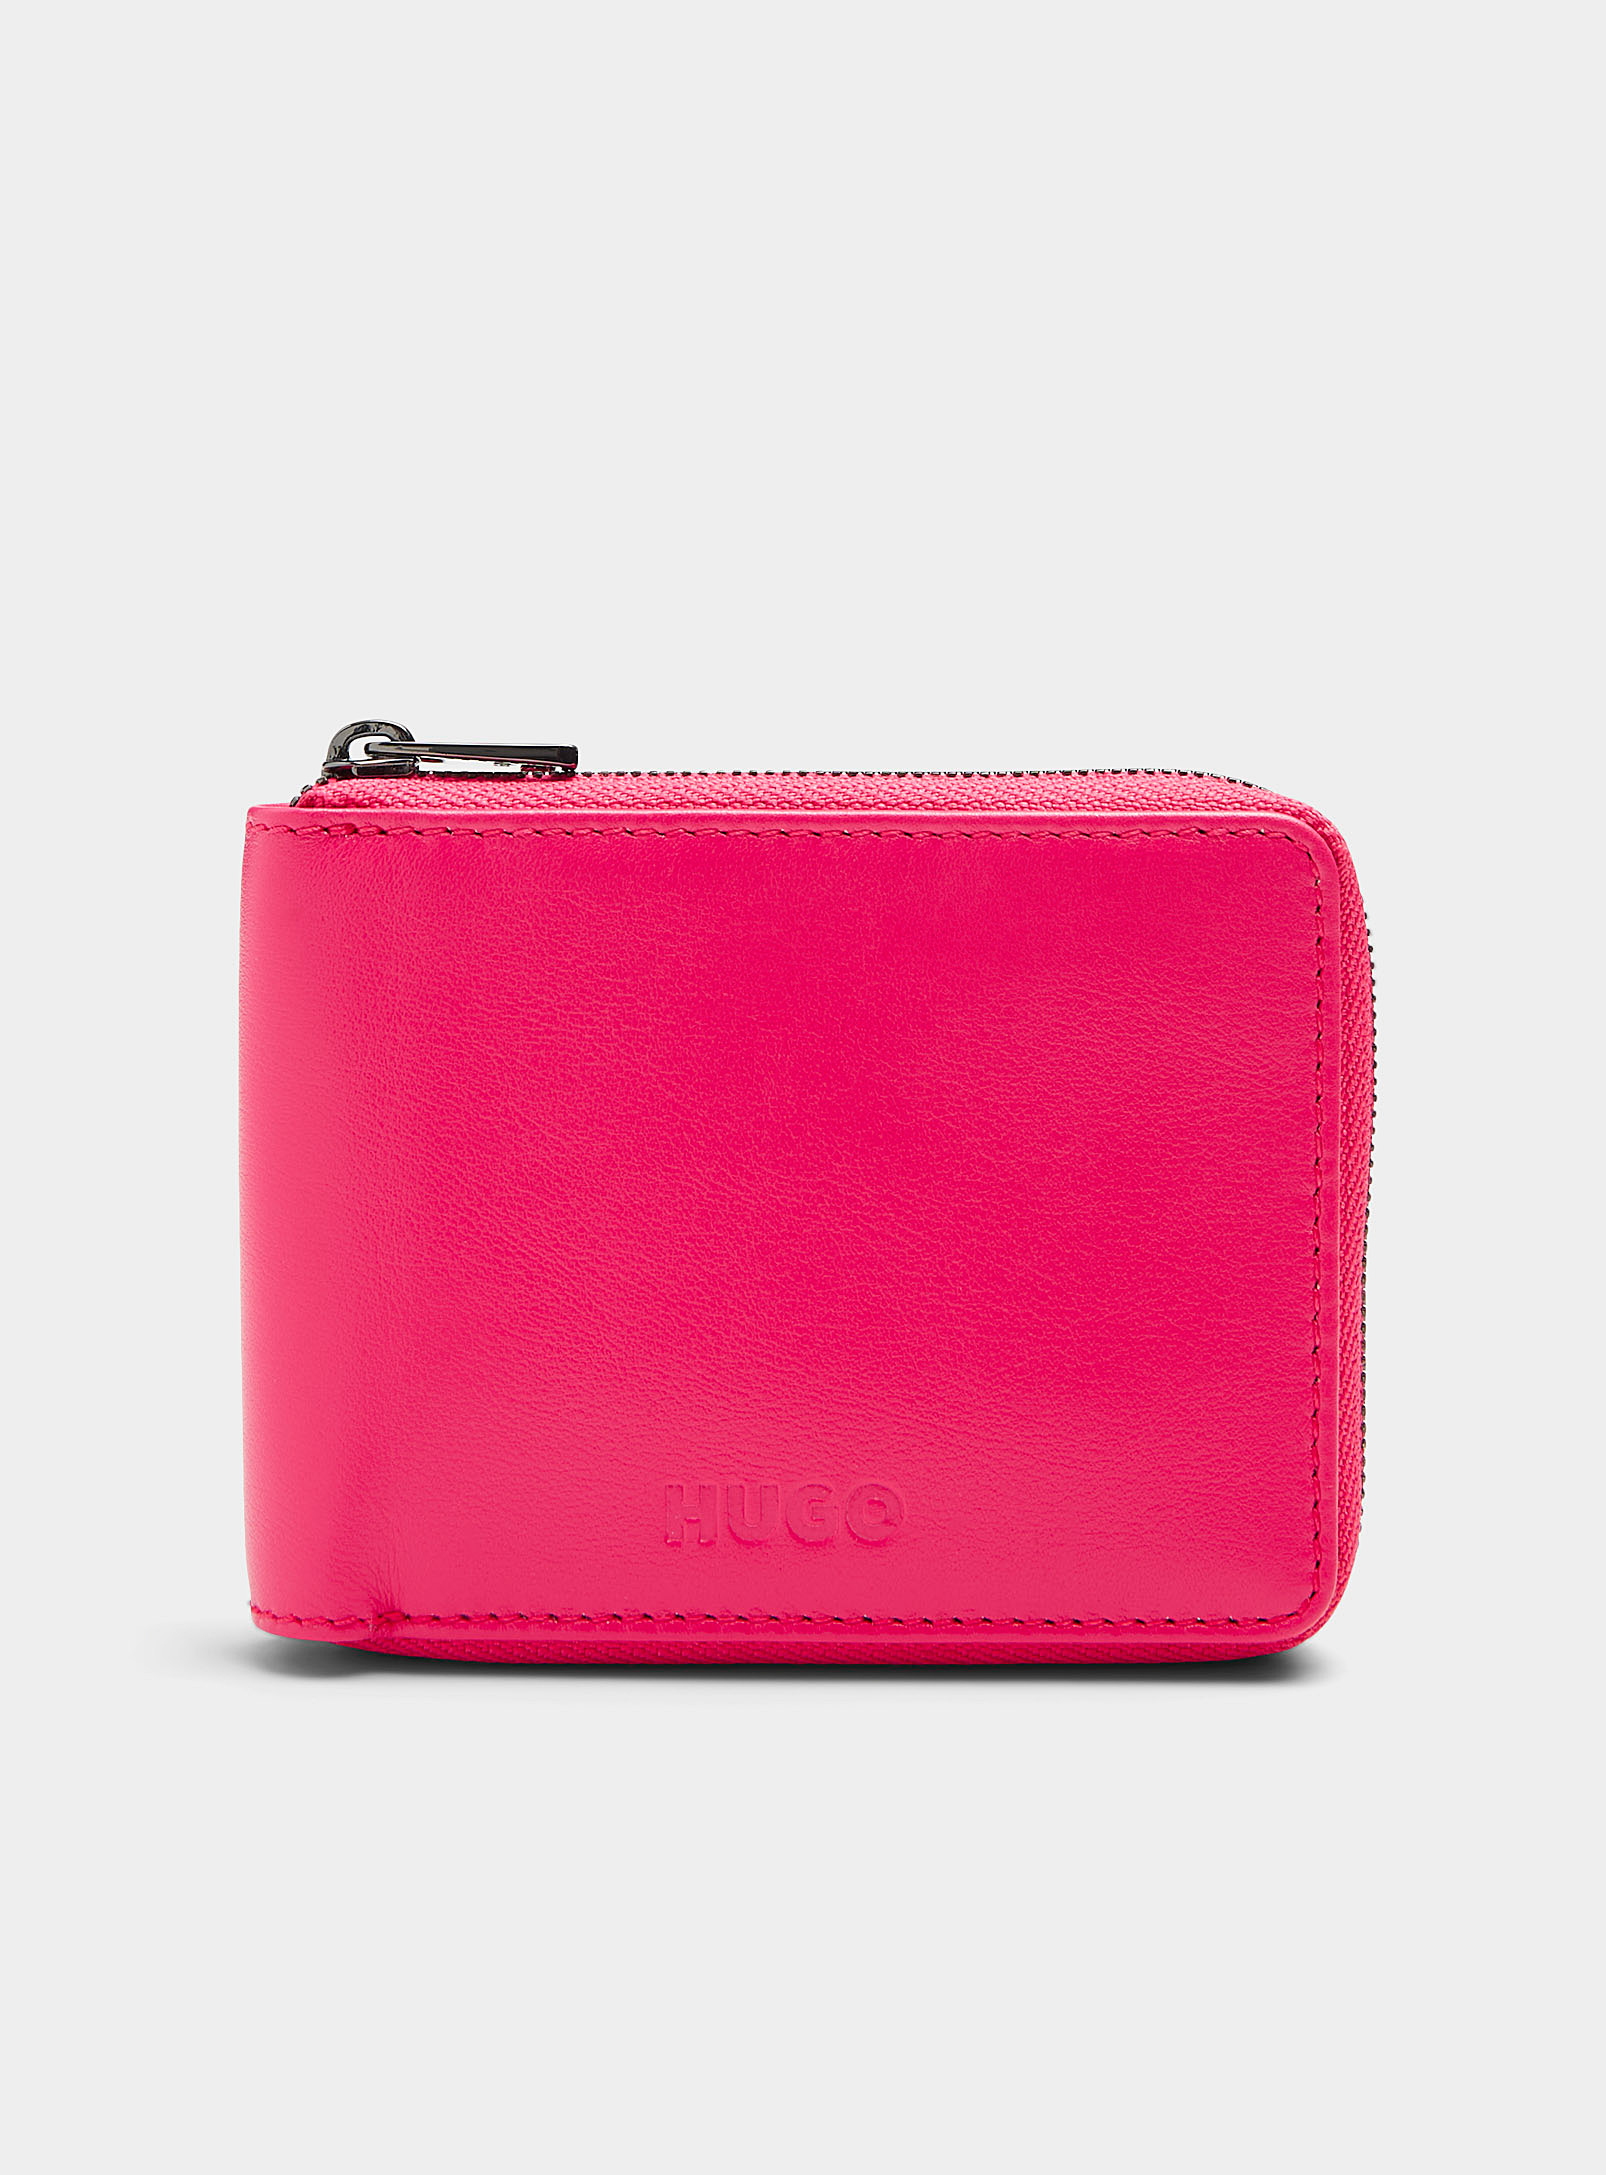 HUGO - Le portefeuille zippé cuir rose vibrant